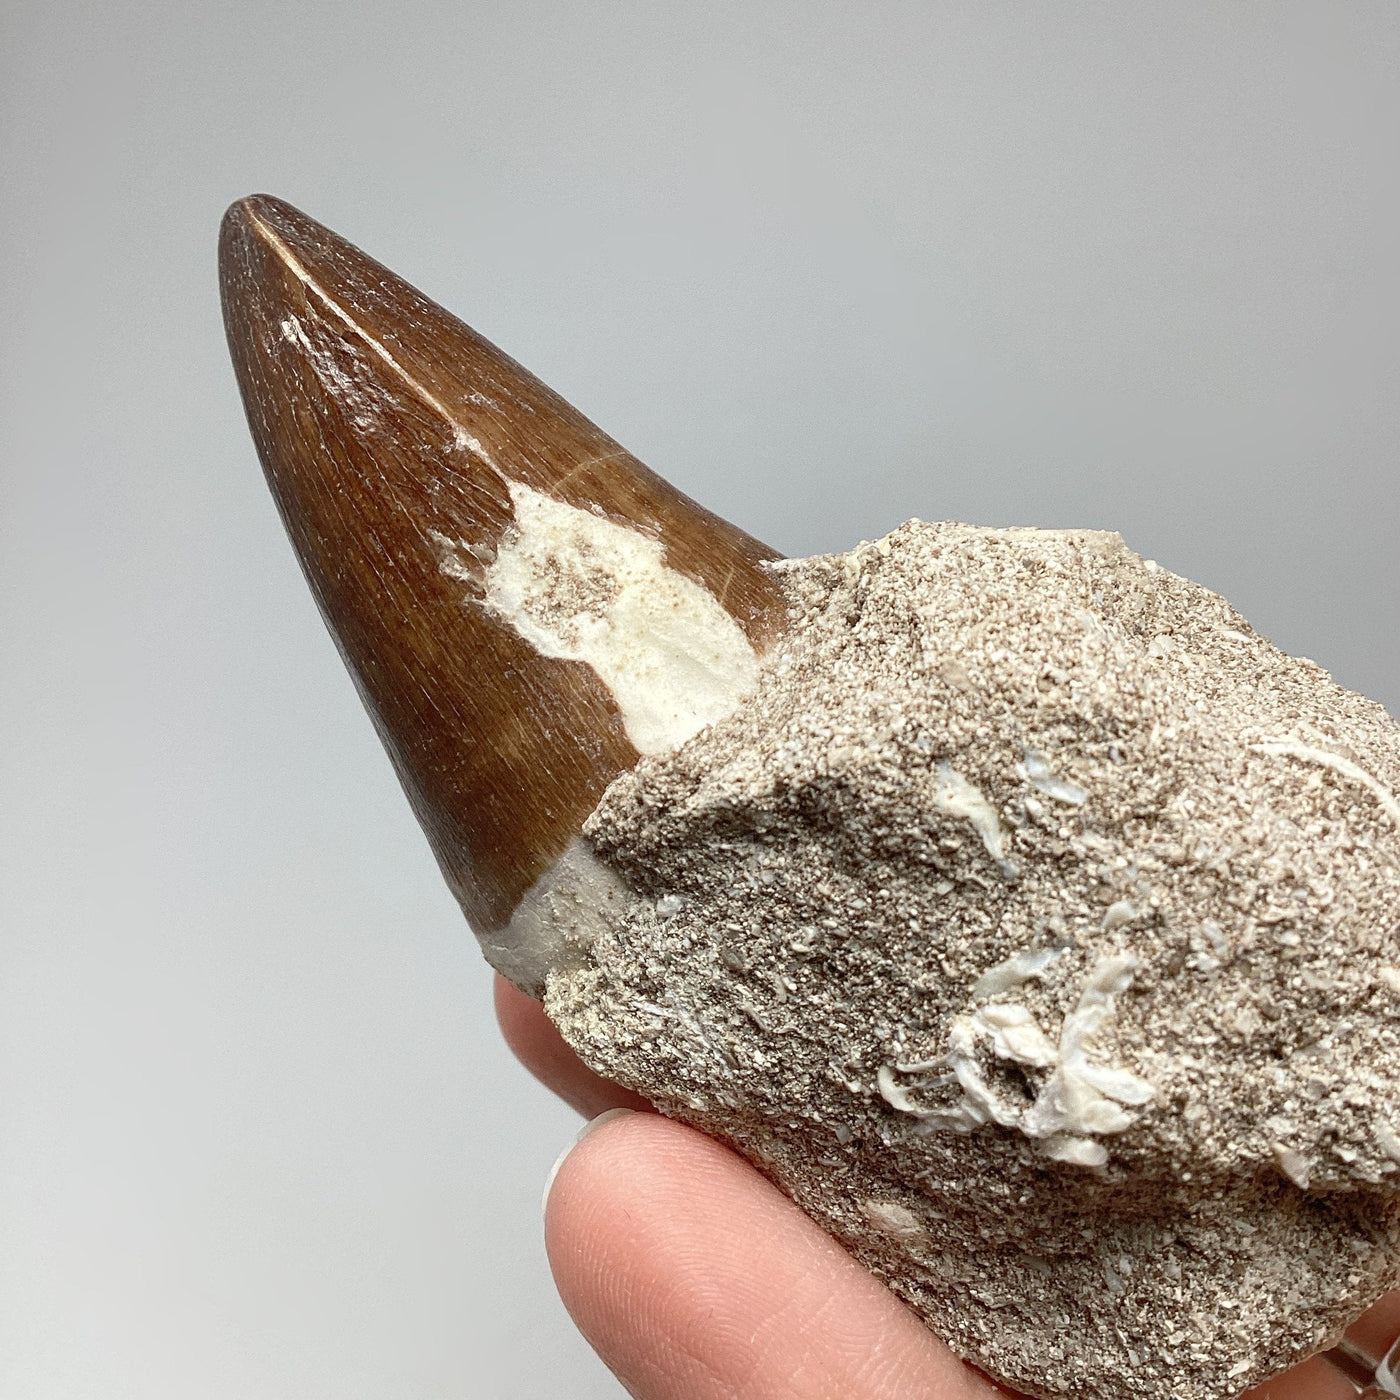 Fossilized Mosasaur Tooth Specimen in Matrix